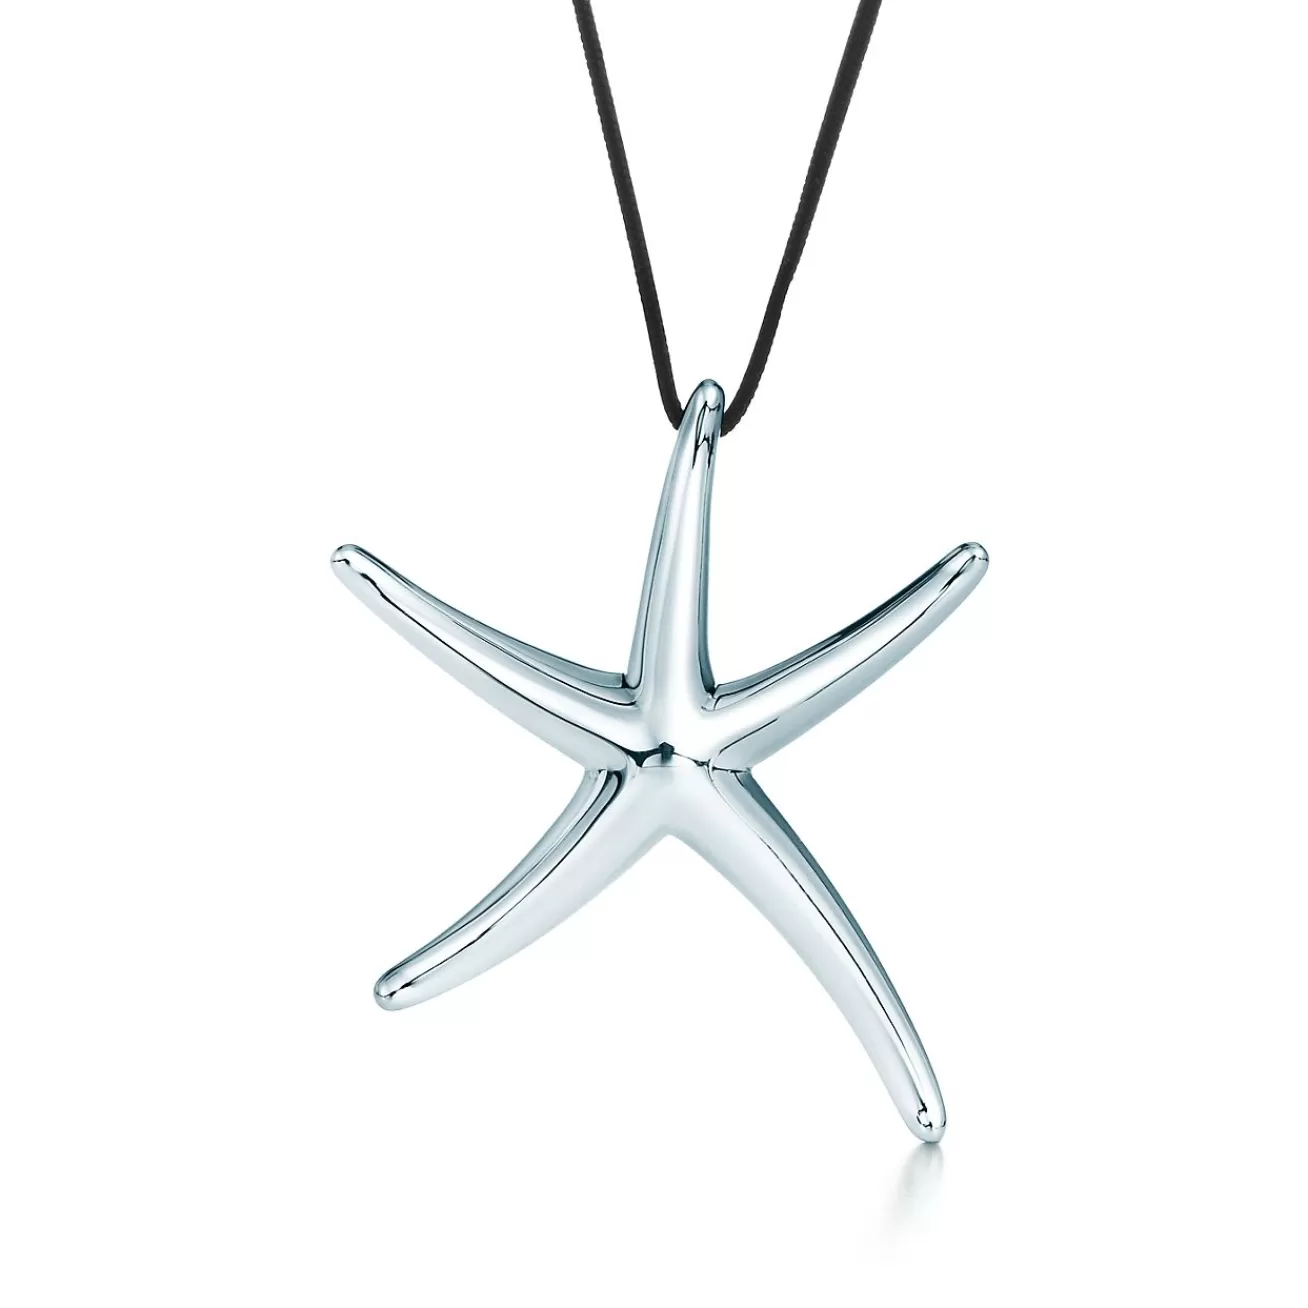 Tiffany & Co. Elsa Peretti® Starfish pendant in sterling silver. | ^ Necklaces & Pendants | Sterling Silver Jewelry